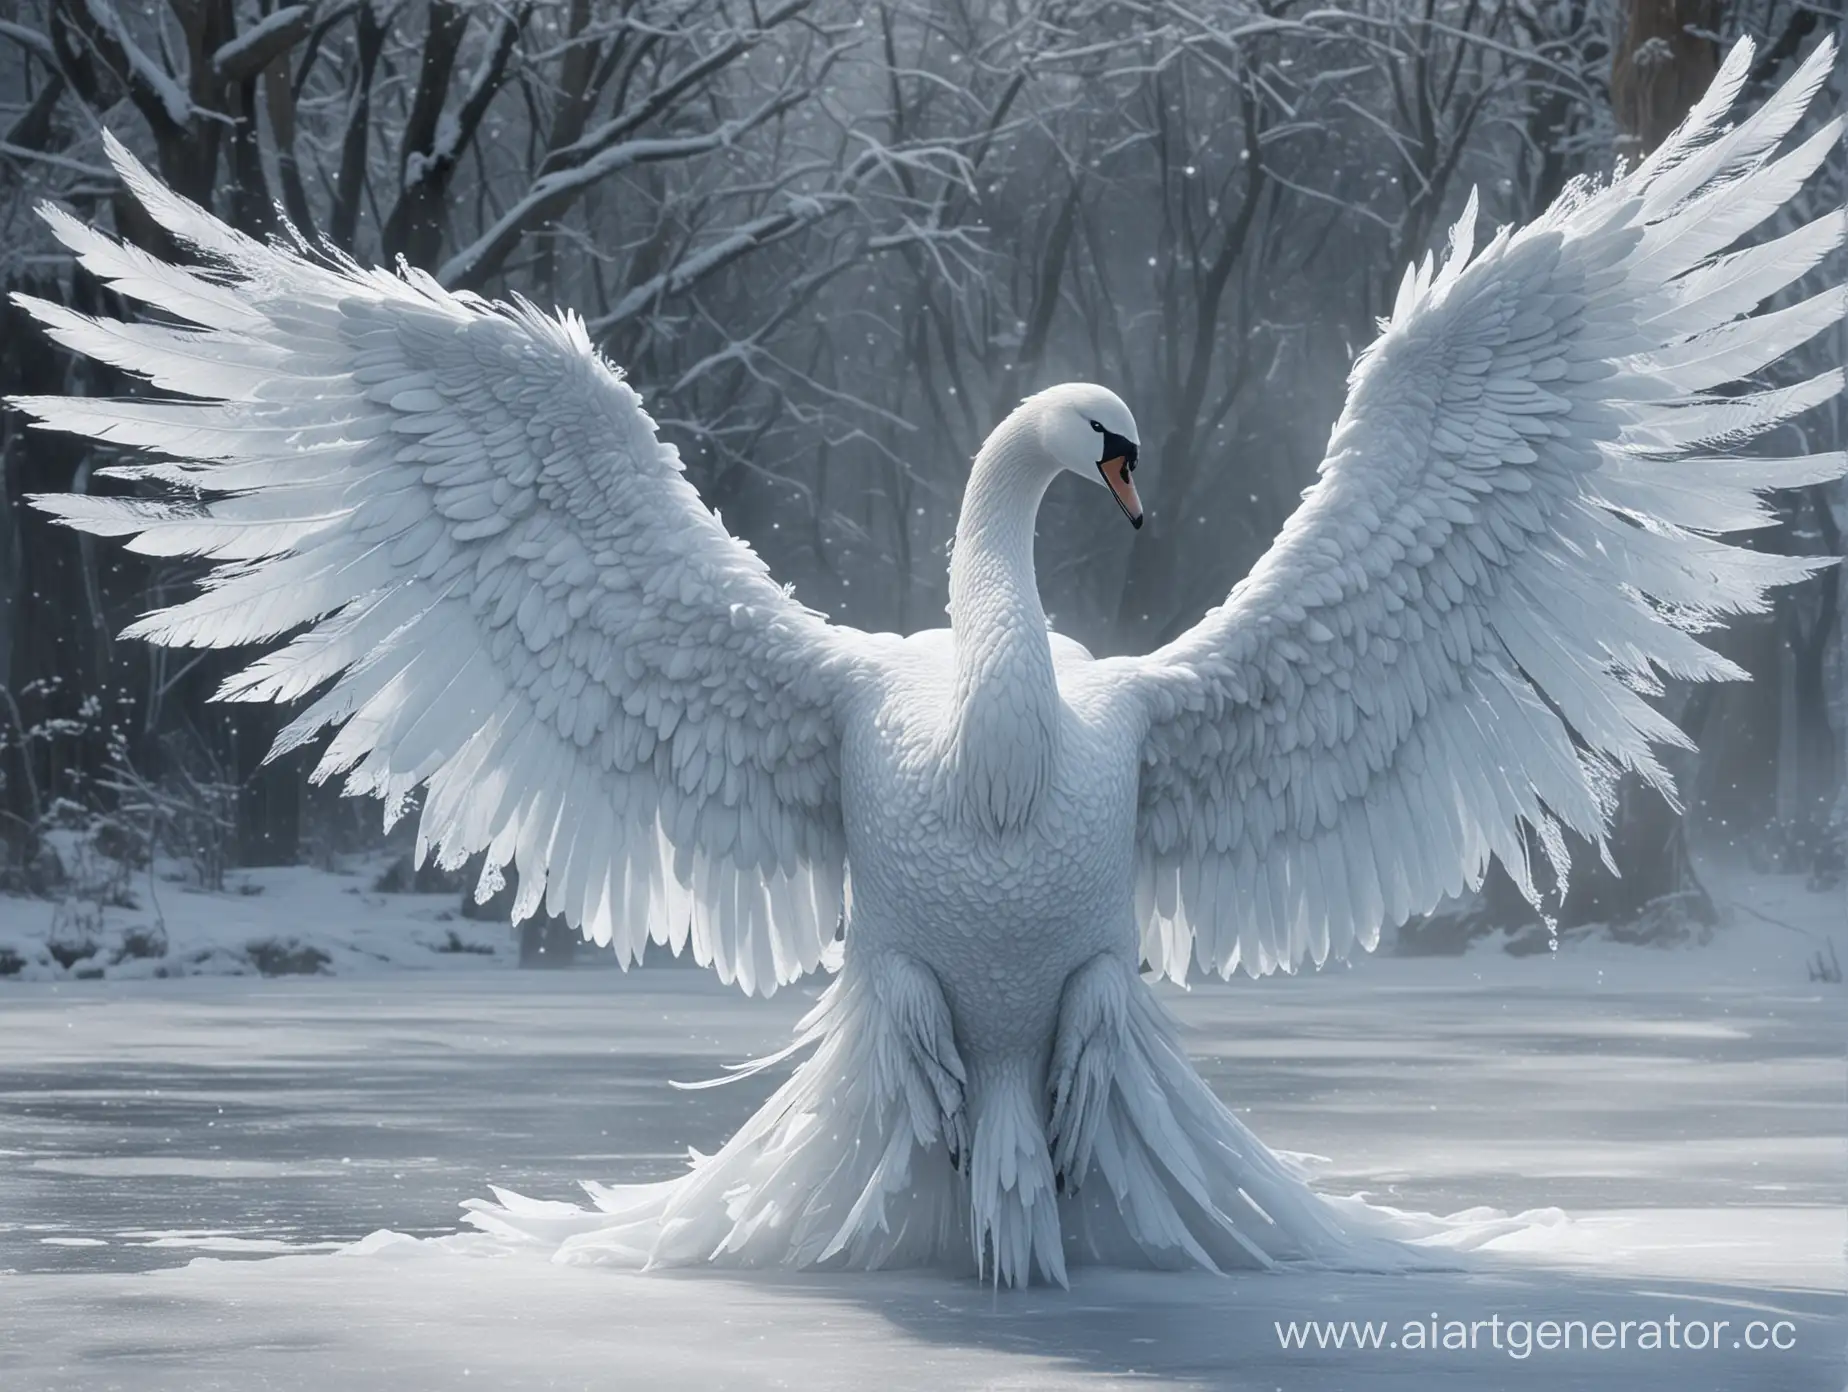 ice elemental spirit of swan with raiced wings